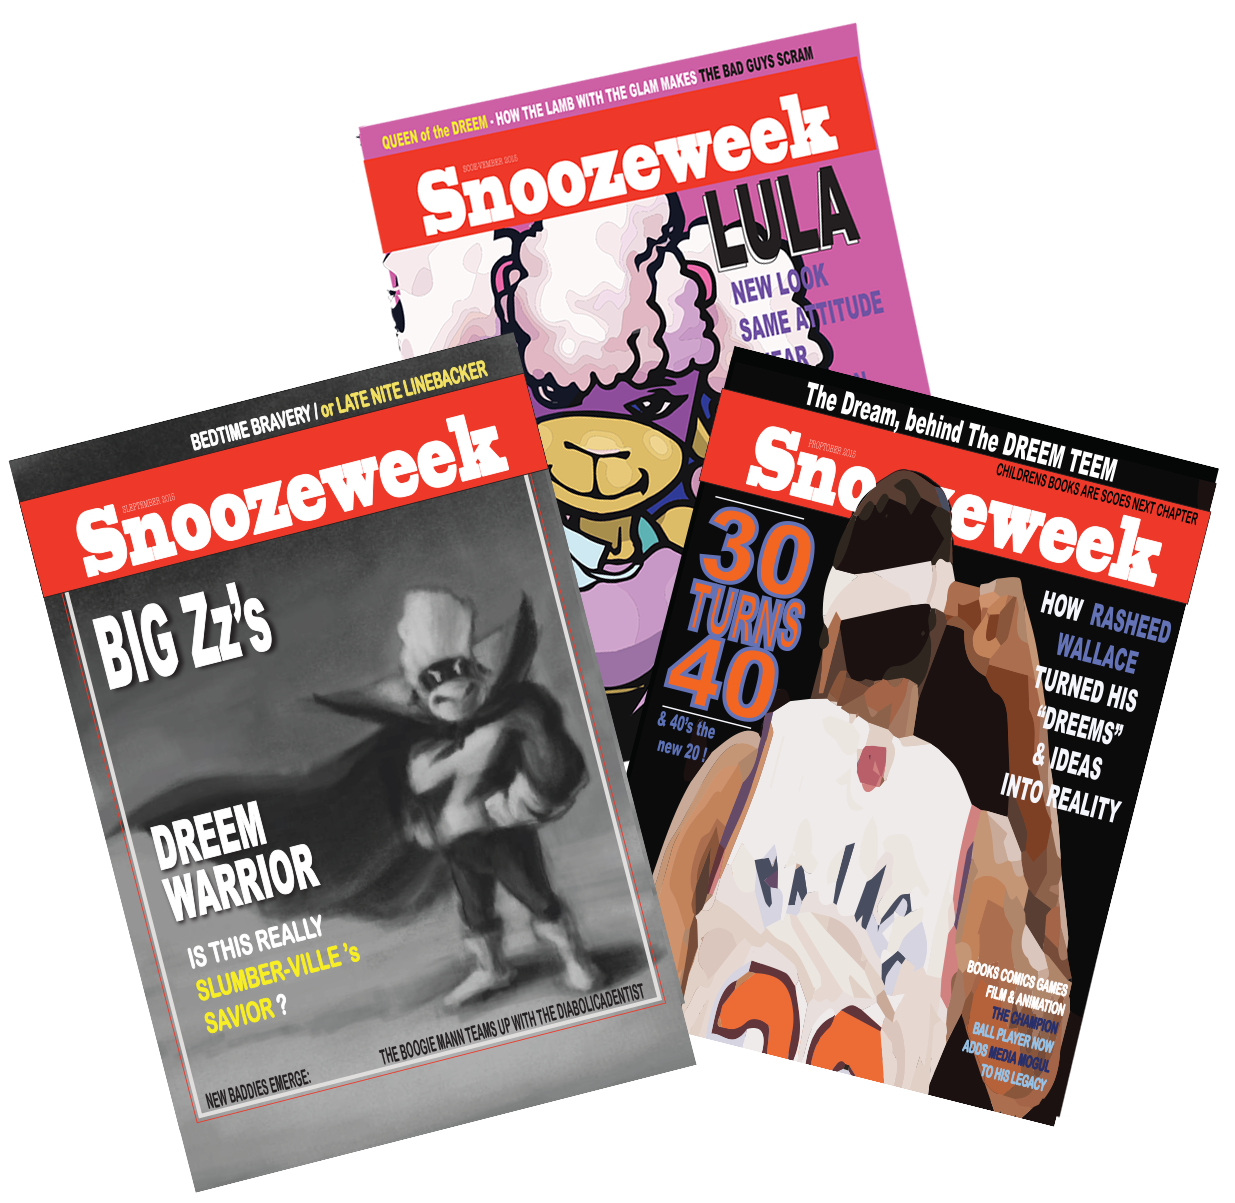 fake magazine Cover, NEWSWEEK, NEWSWEAK, snoozeweek, sheedgotjokes, saddlerward, quanzilla, fake magazine art, mock magazine, Big Zz’s and the dreamteem, Big Zz’s and the Dream Team, Rasheed wallace, rasheed wallace goals
snooze_week.psd fake magazine Cover, NEWSWEEK, NEWSWEAK, snoozeweek, sheedgotjokes, saddlerward, quanzilla, fake magazine art, mock magazine, Big Zz’s and the dreamteem, Big Zz’s and the Dream Team, Rasheed wallace, rasheed wallace goals, R. Wallace detroit pistons championship